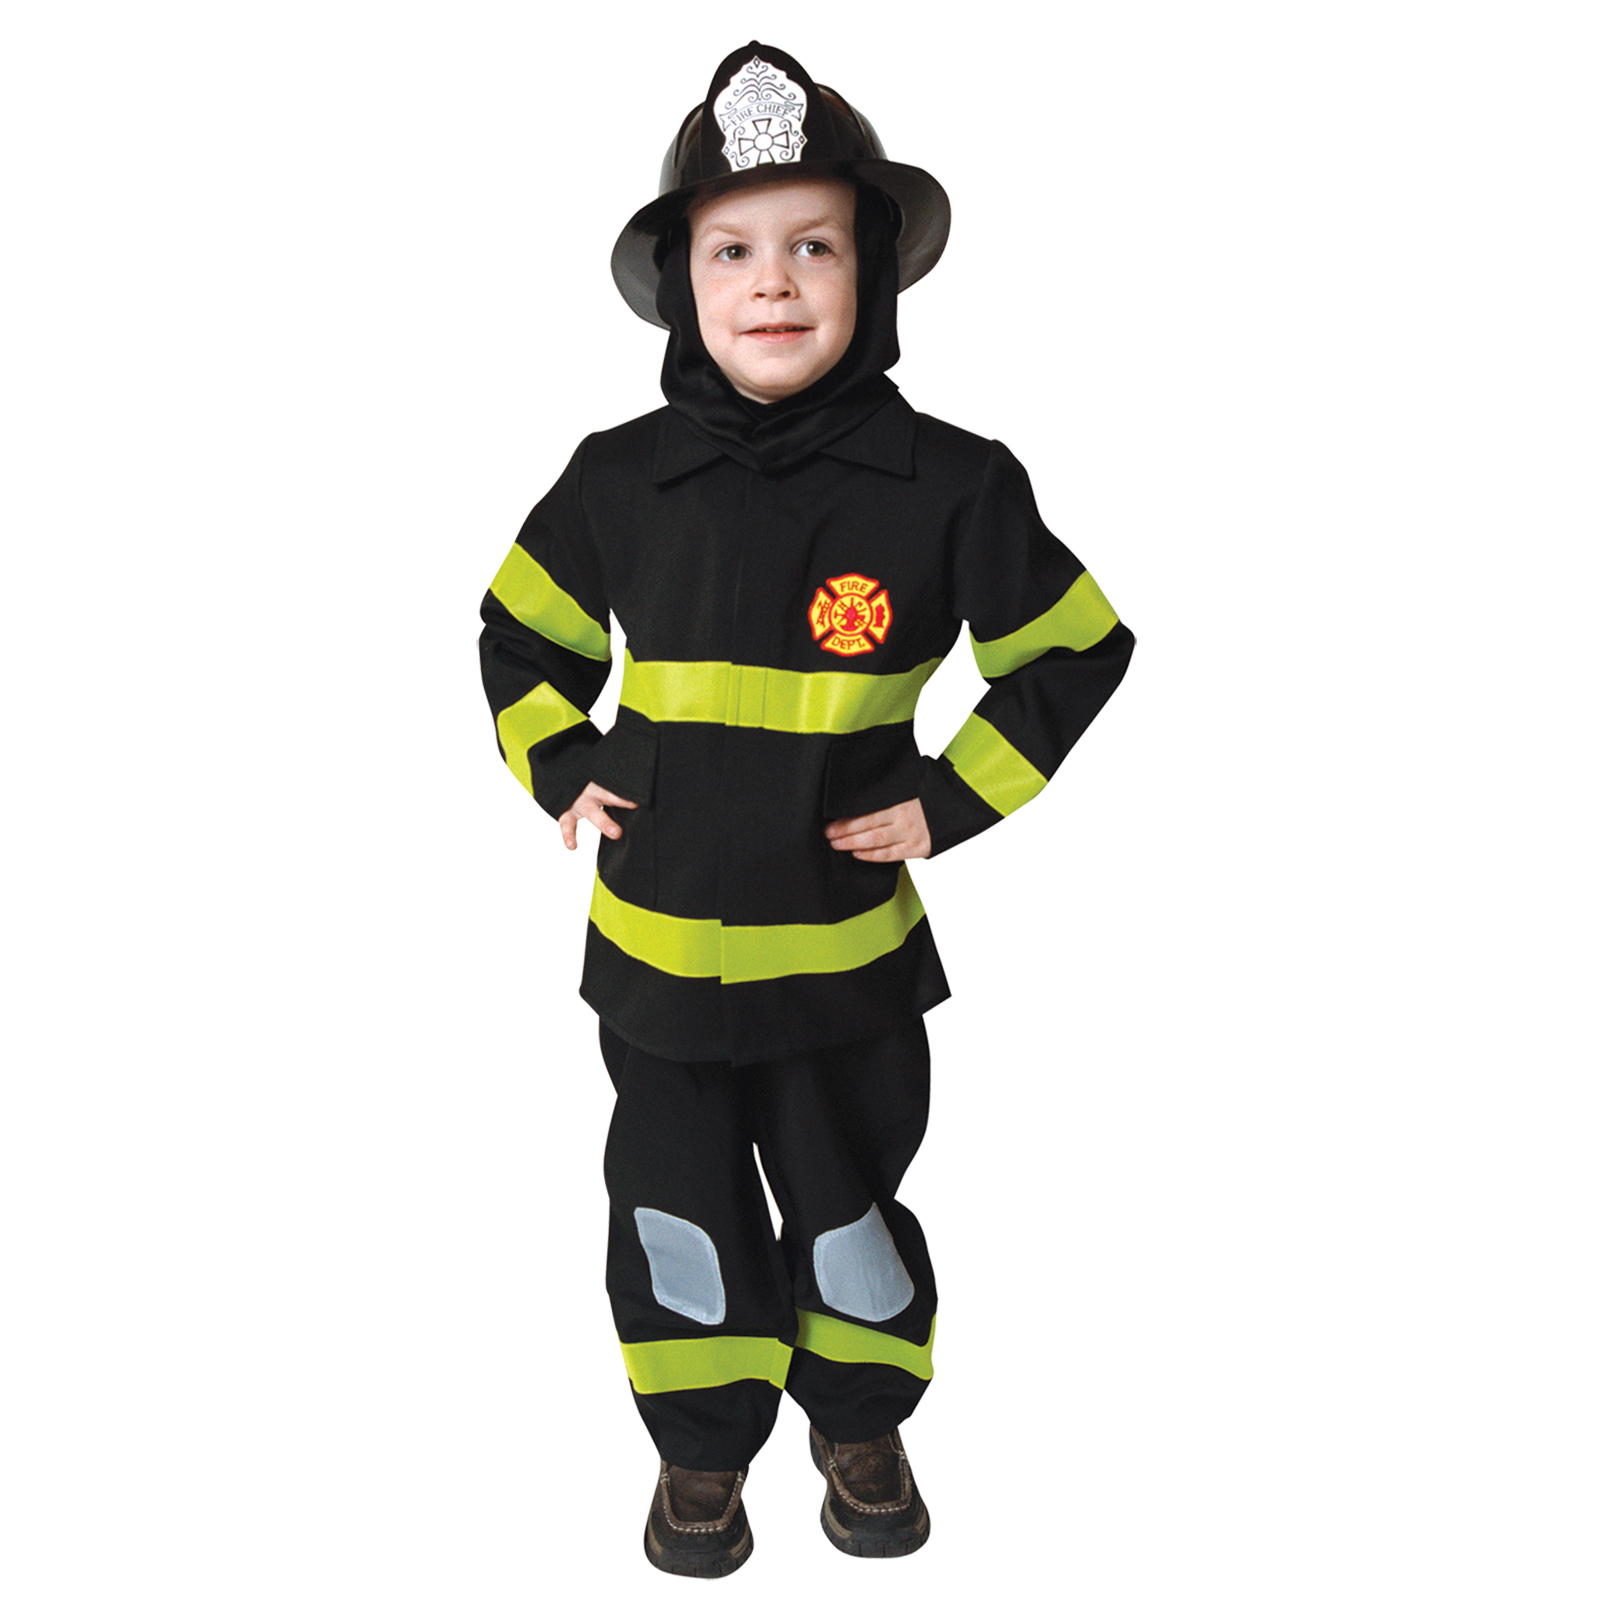 Boys Fire Fighter Halloween Costume